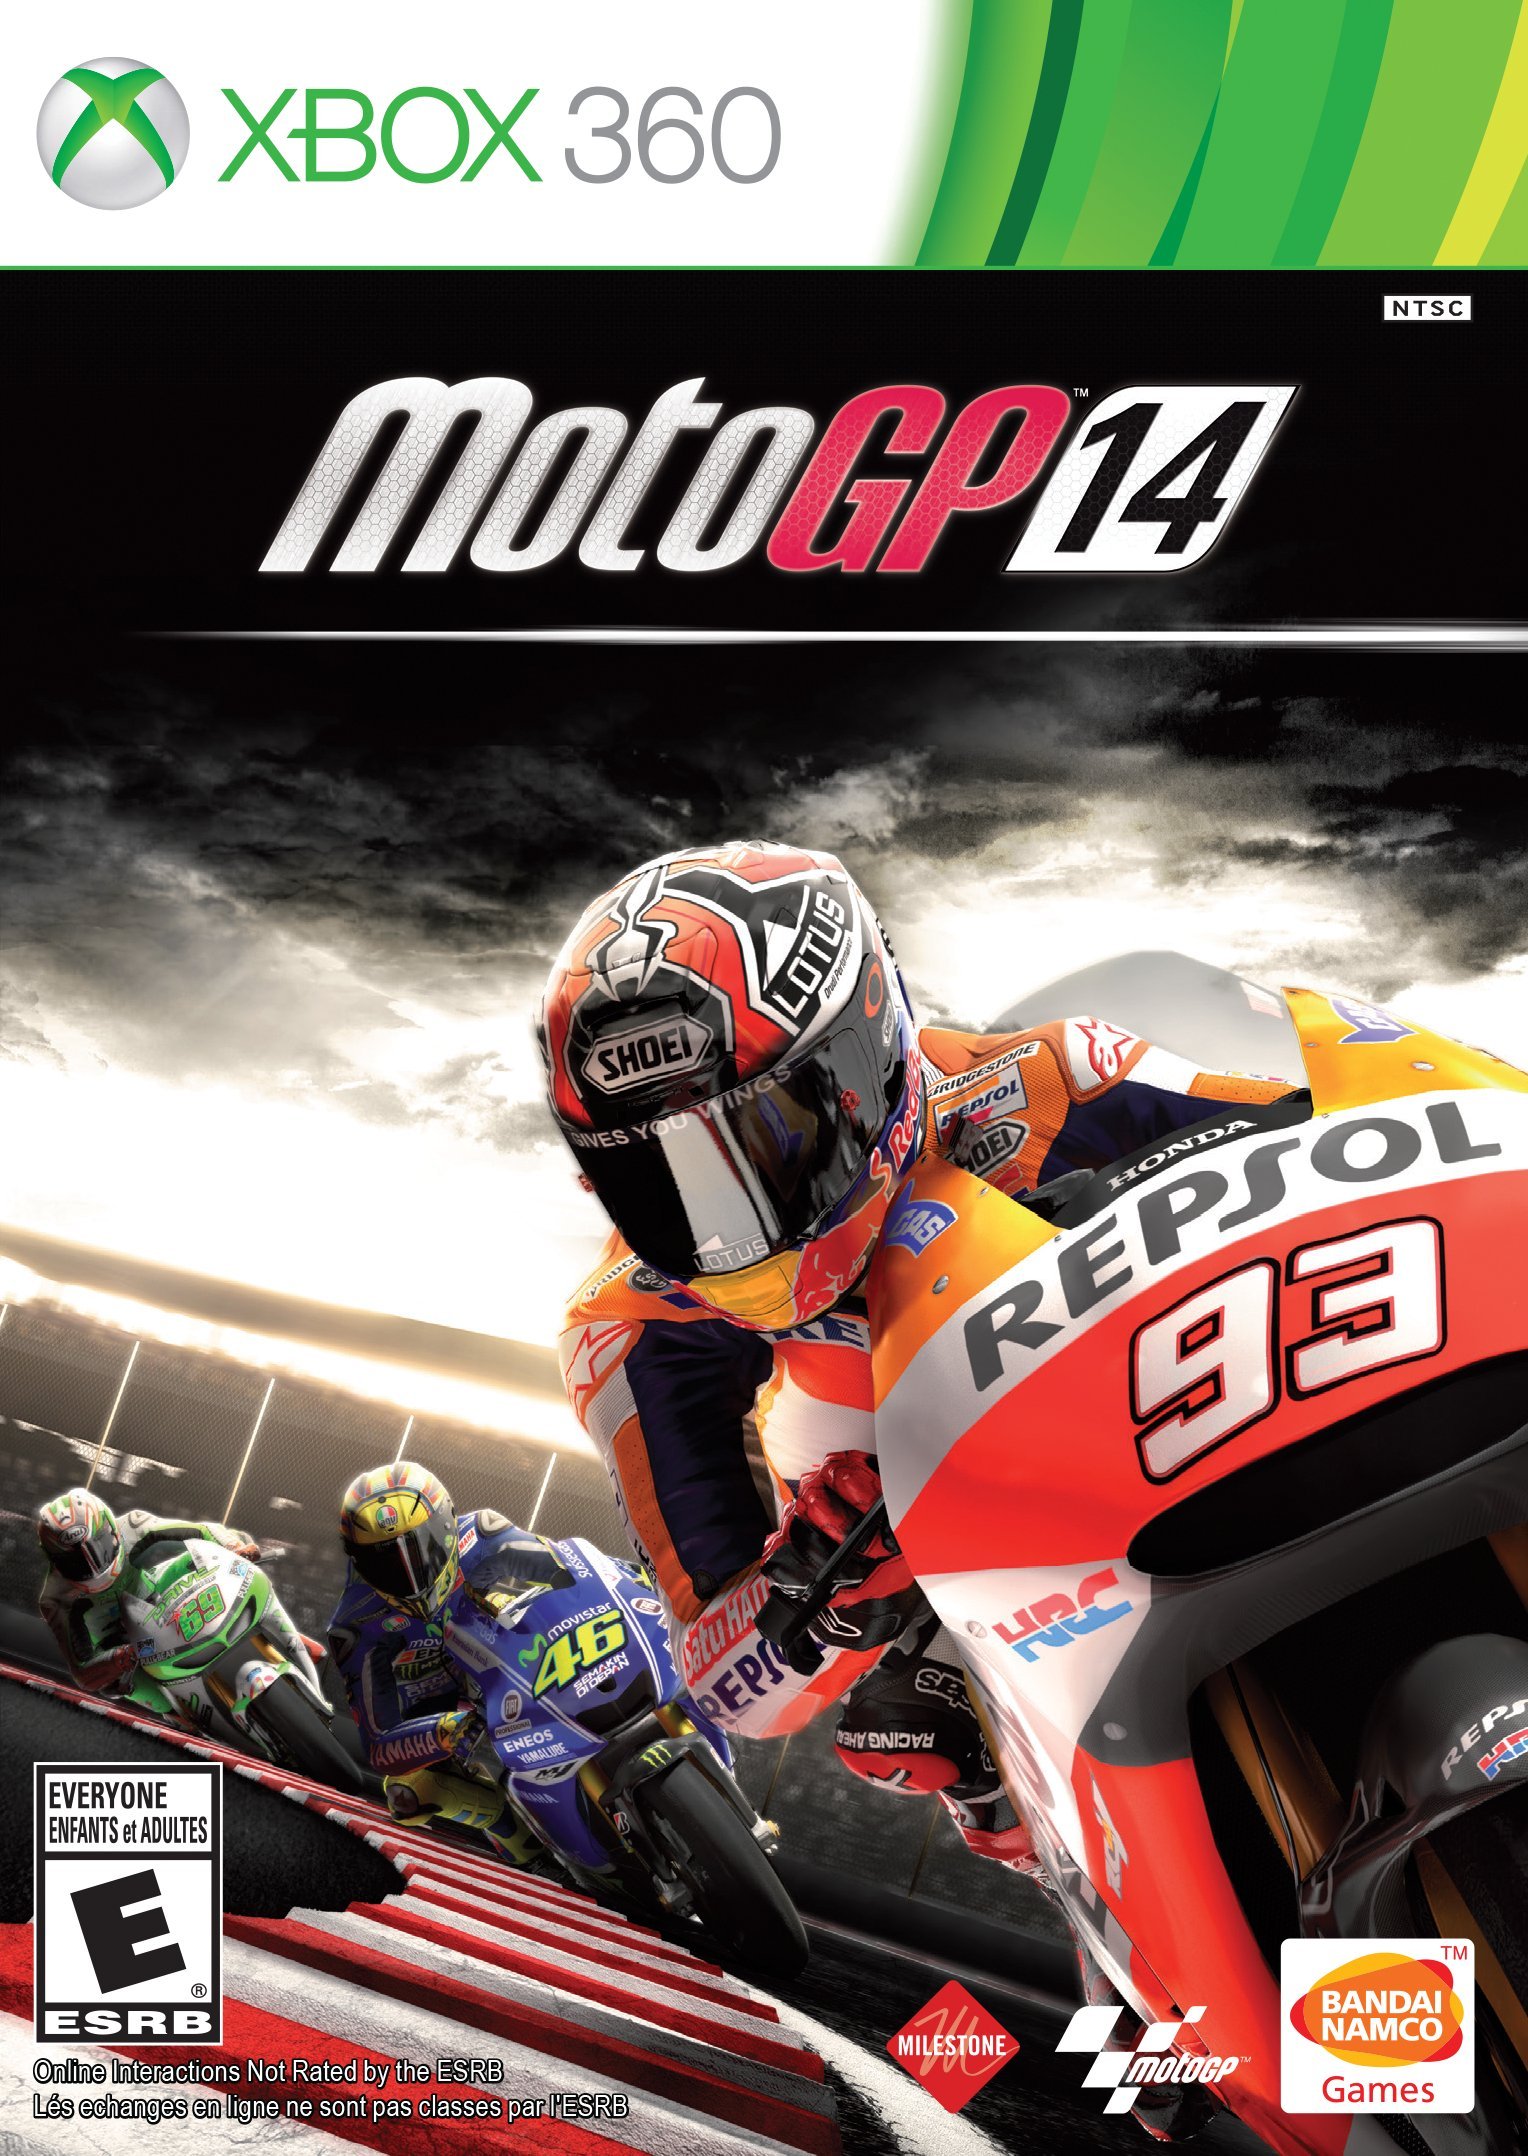 Moto GP 2014 Release Date (Xbox 360, PS3, PS4)